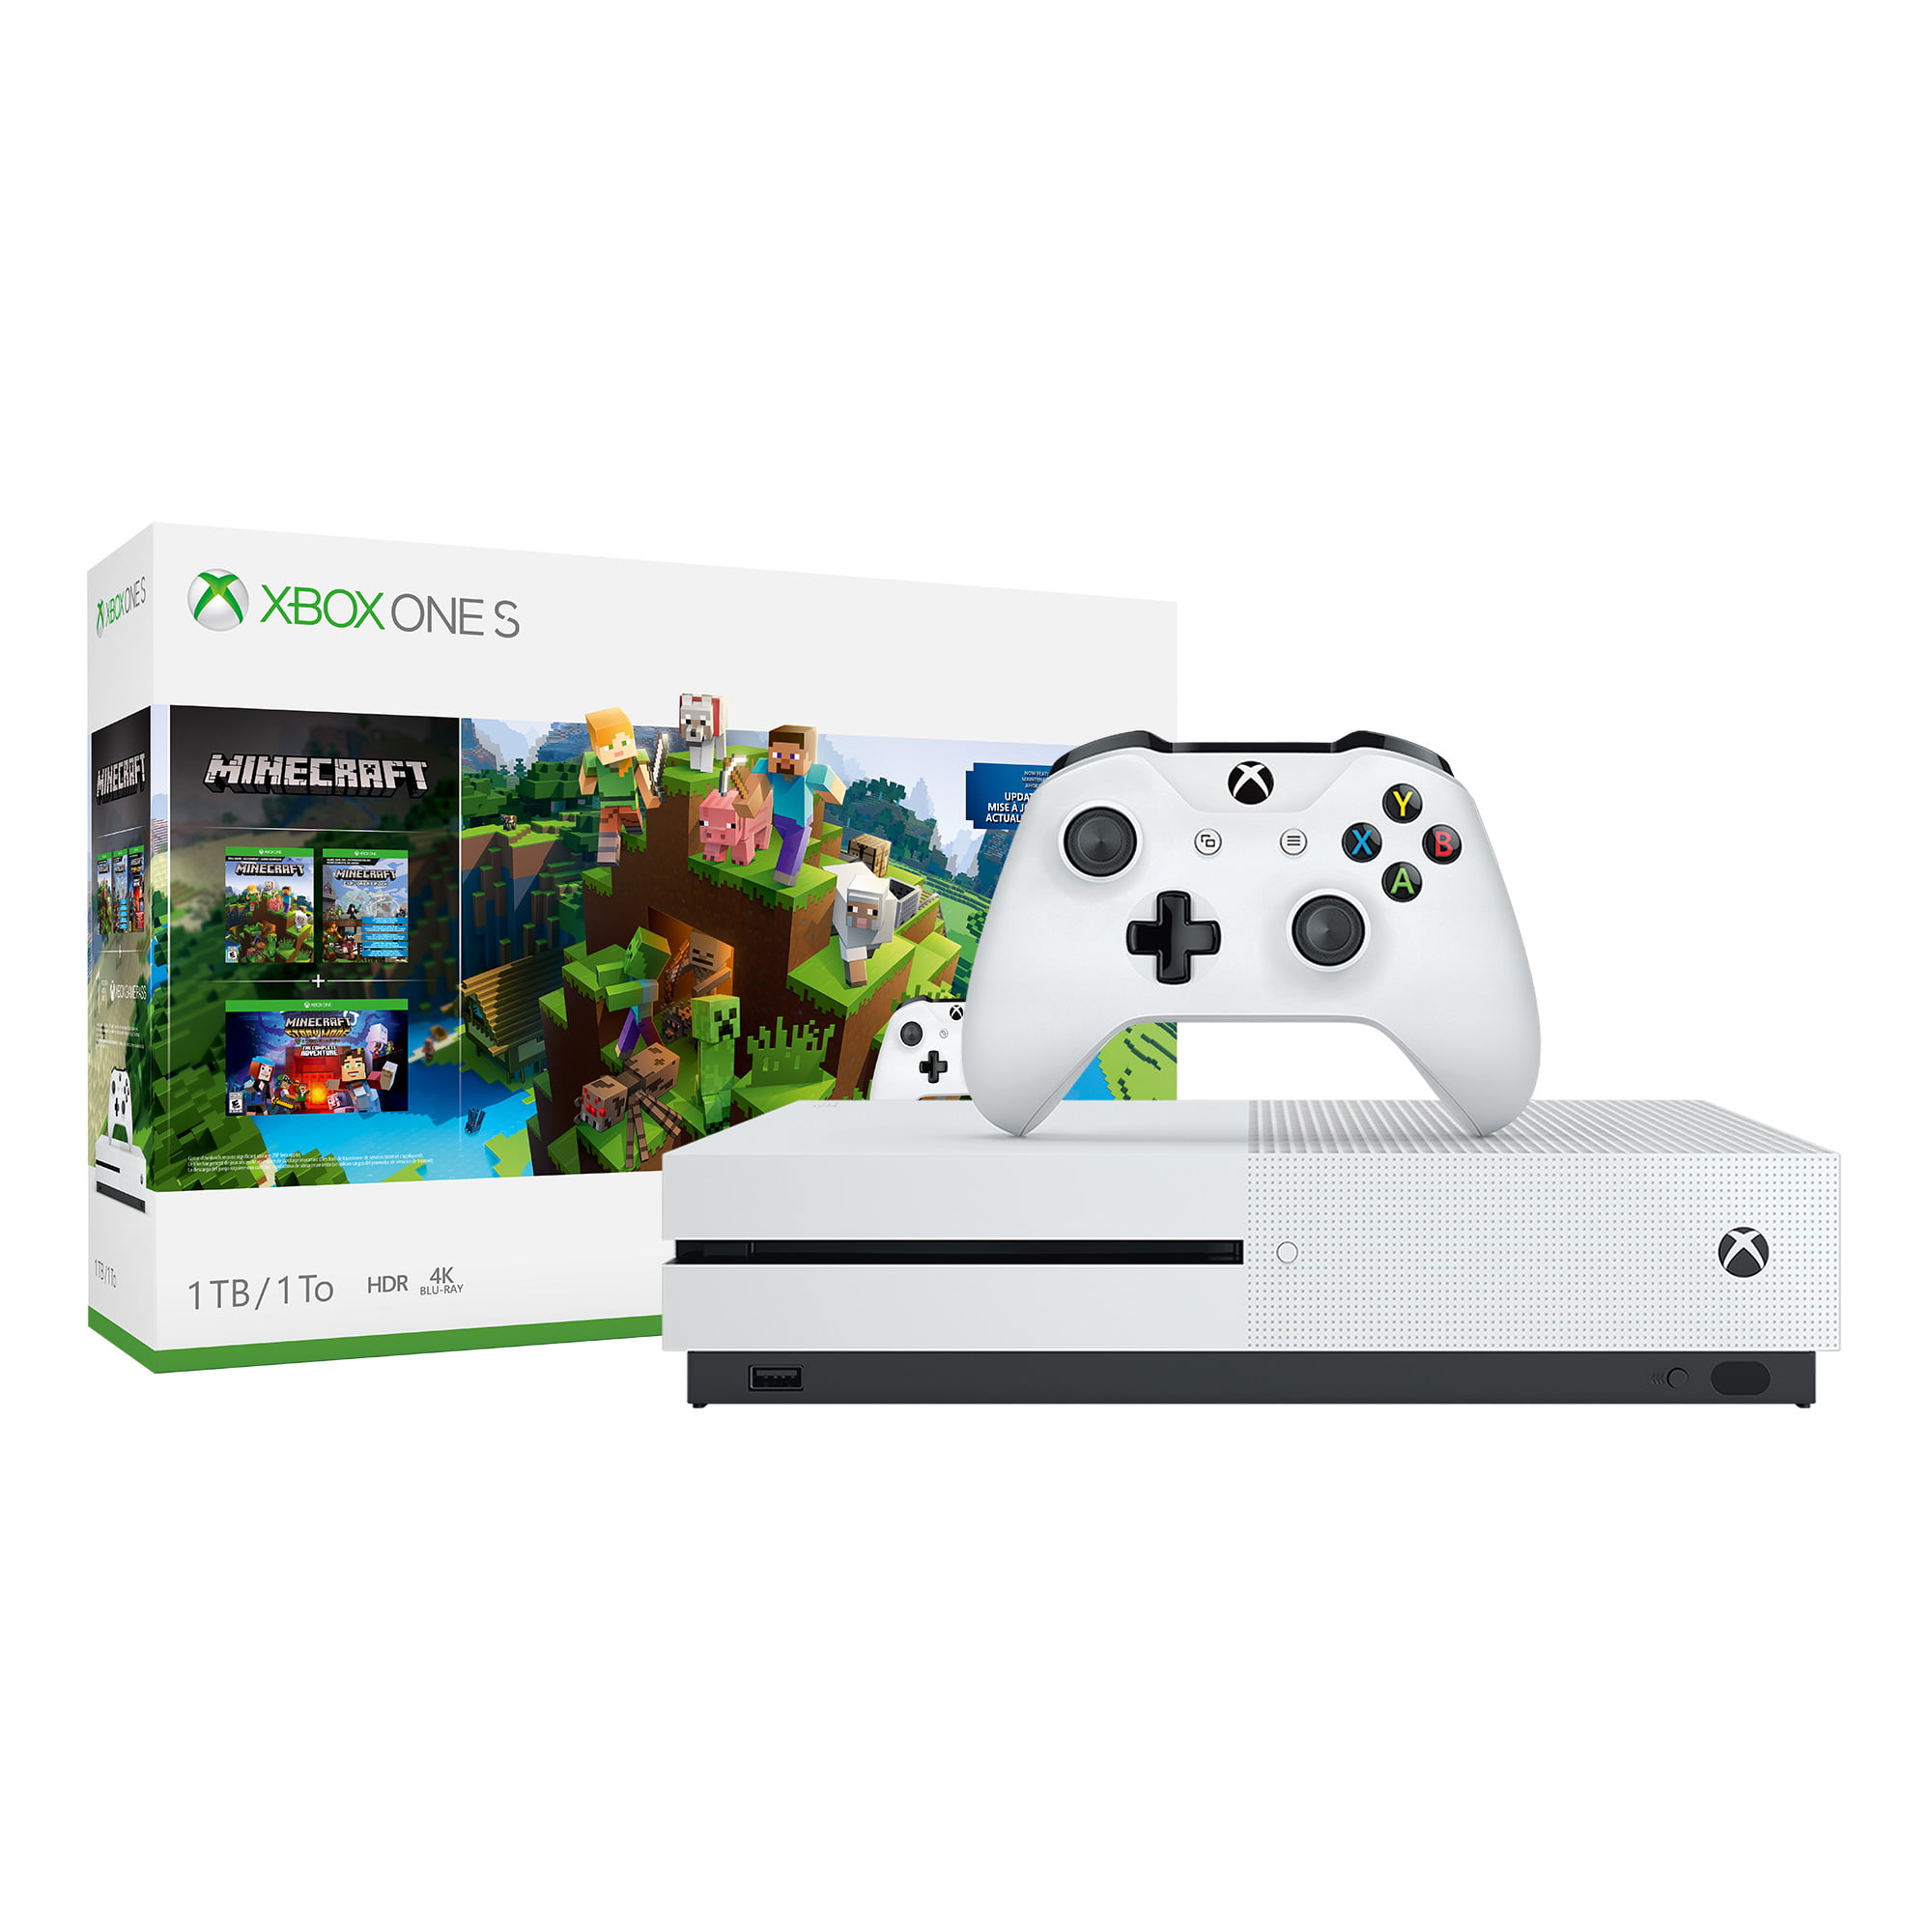 Microsoft Xbox One S 1tb Minecraft Bundle White 234 00506 Walmart Com Walmart Com - microsoft xbox one s 1tb roblox console bundle 234 01214 best buy